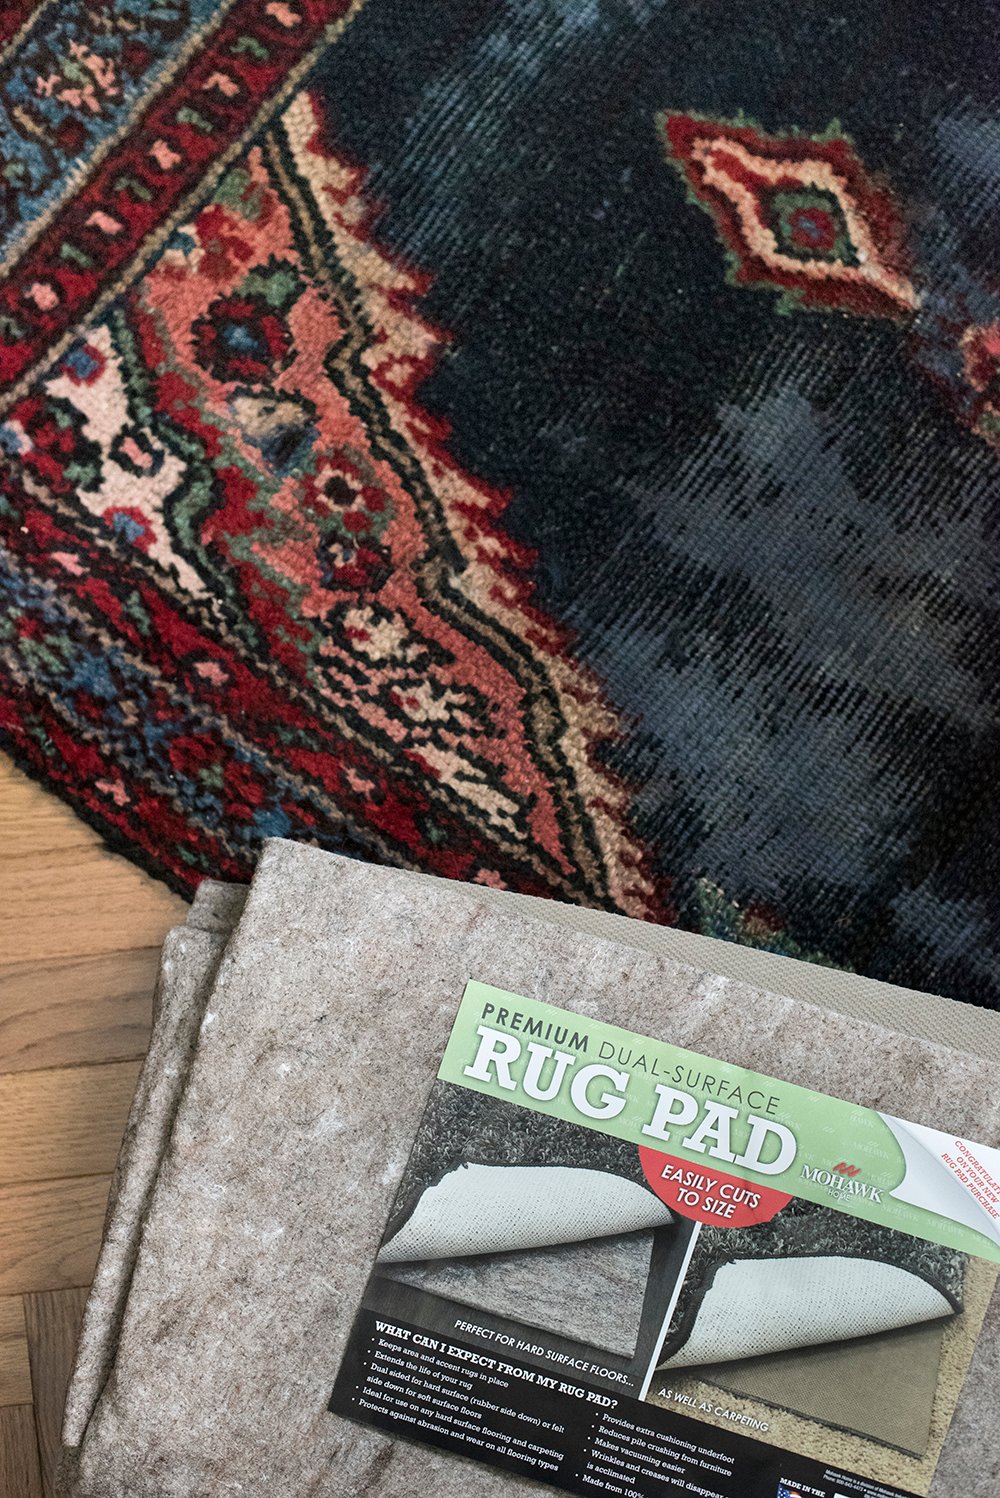 Why You Should Buy a Felt Rug Pad vs. a Rubber Rug Pad